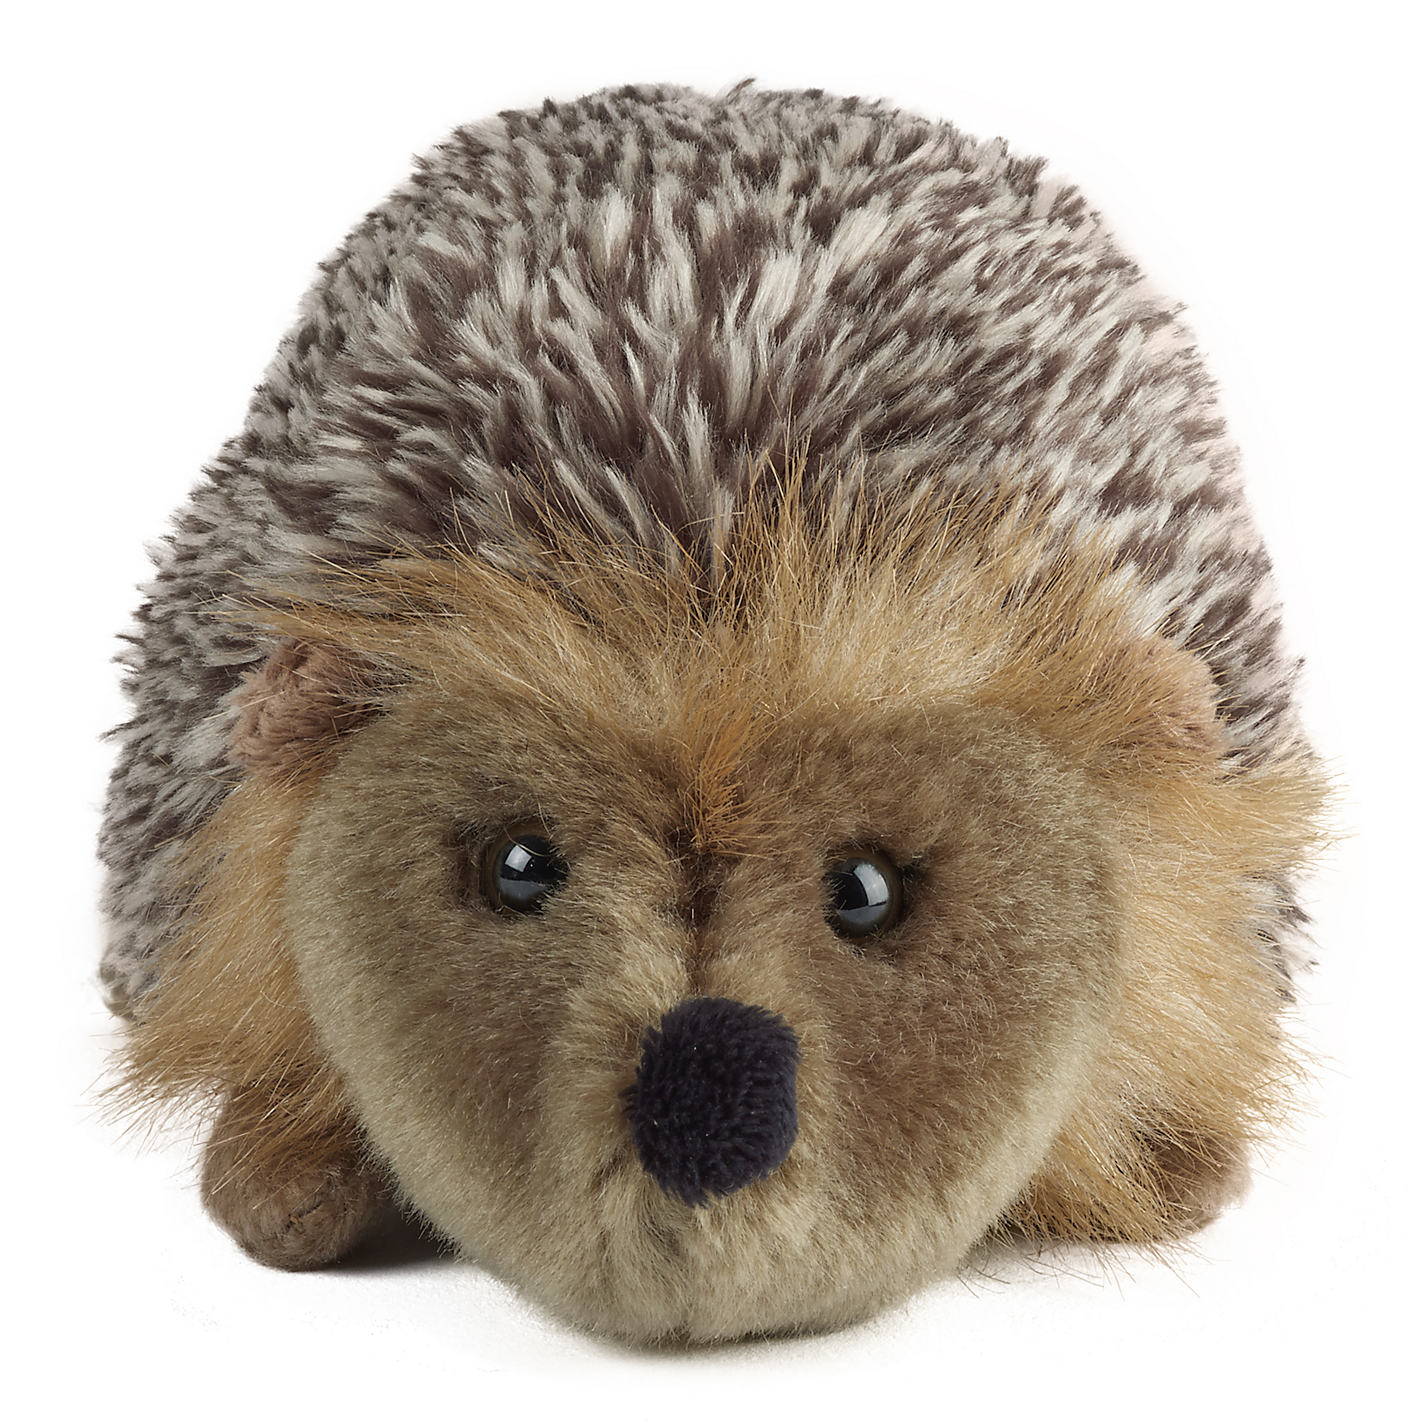 I Want To Buy A Hedgehog